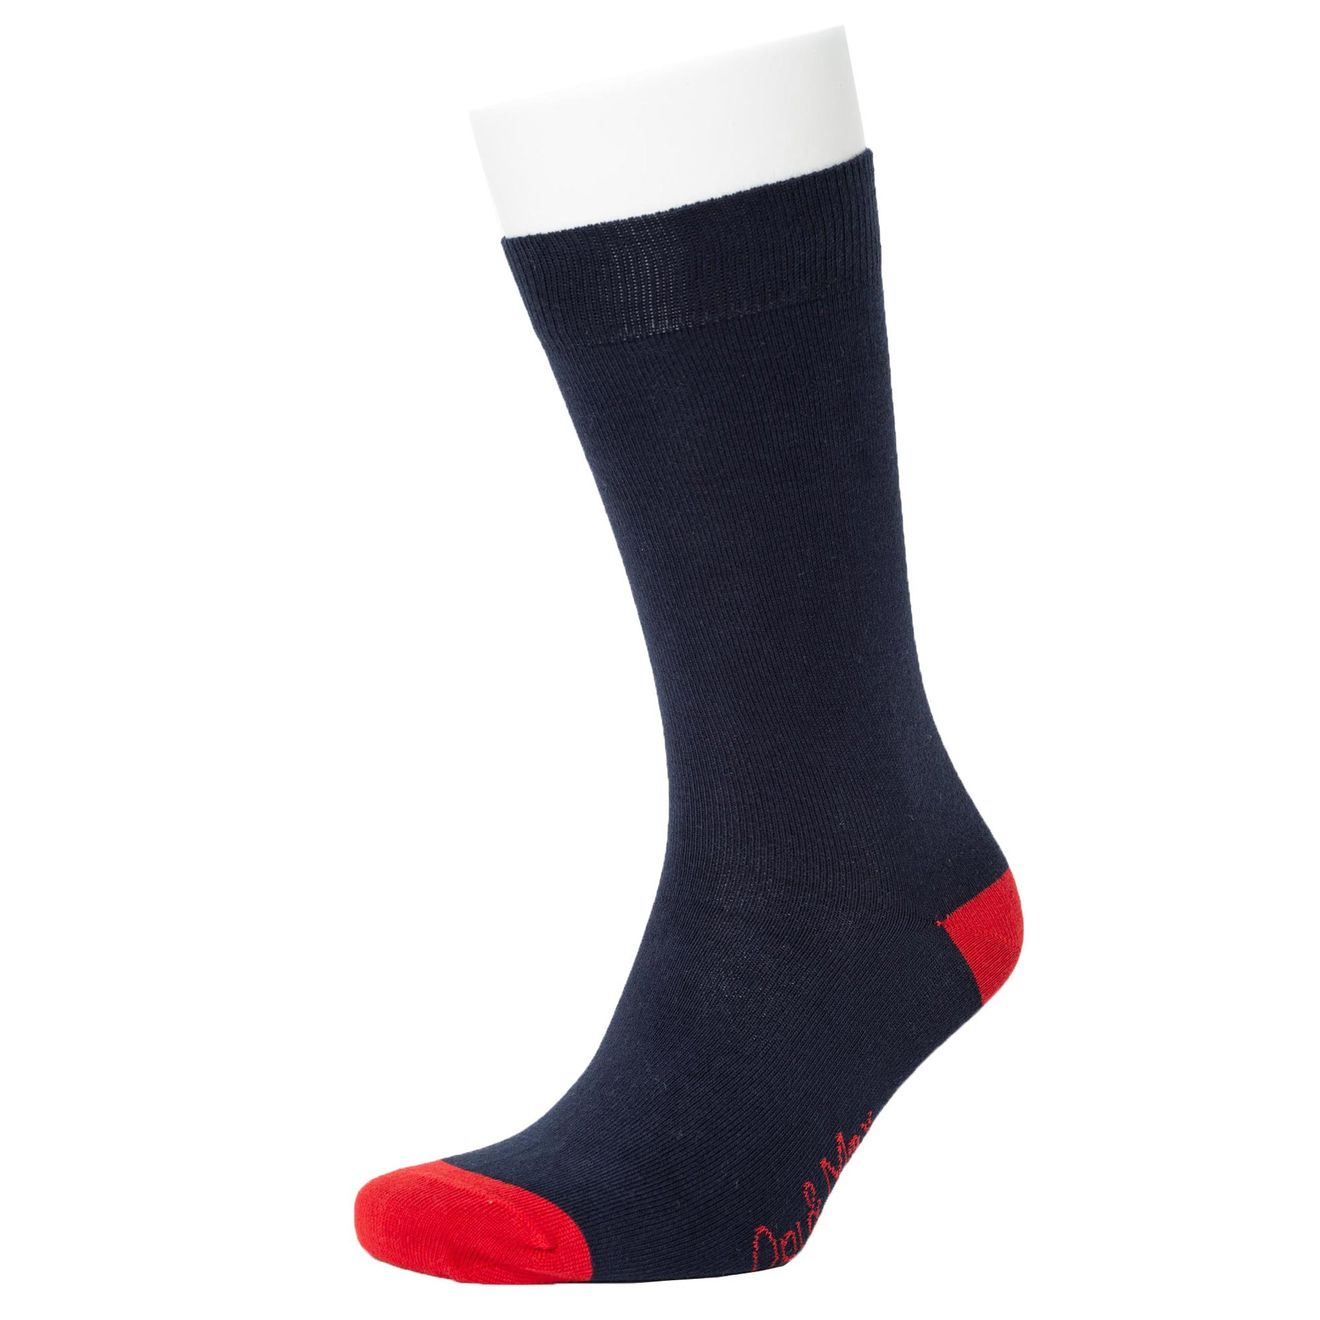 Contrast Heel and Toe Socks navy red